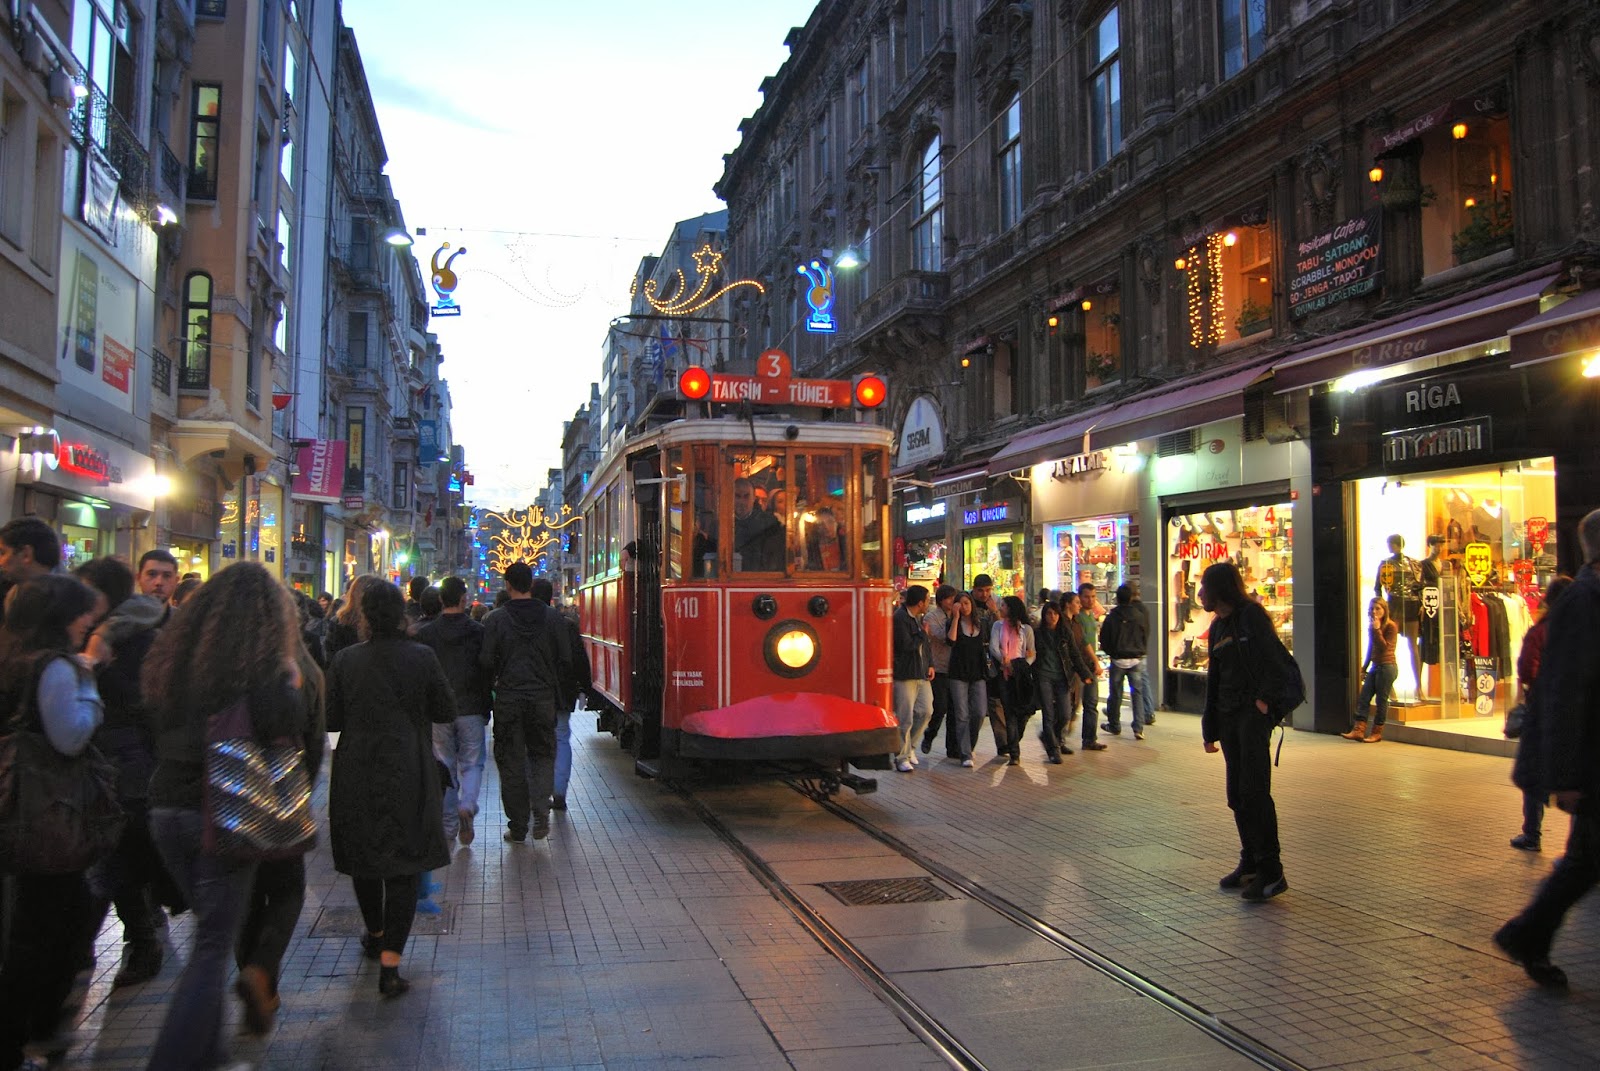 Rezultat slika za istiklal ulica u istanbulu